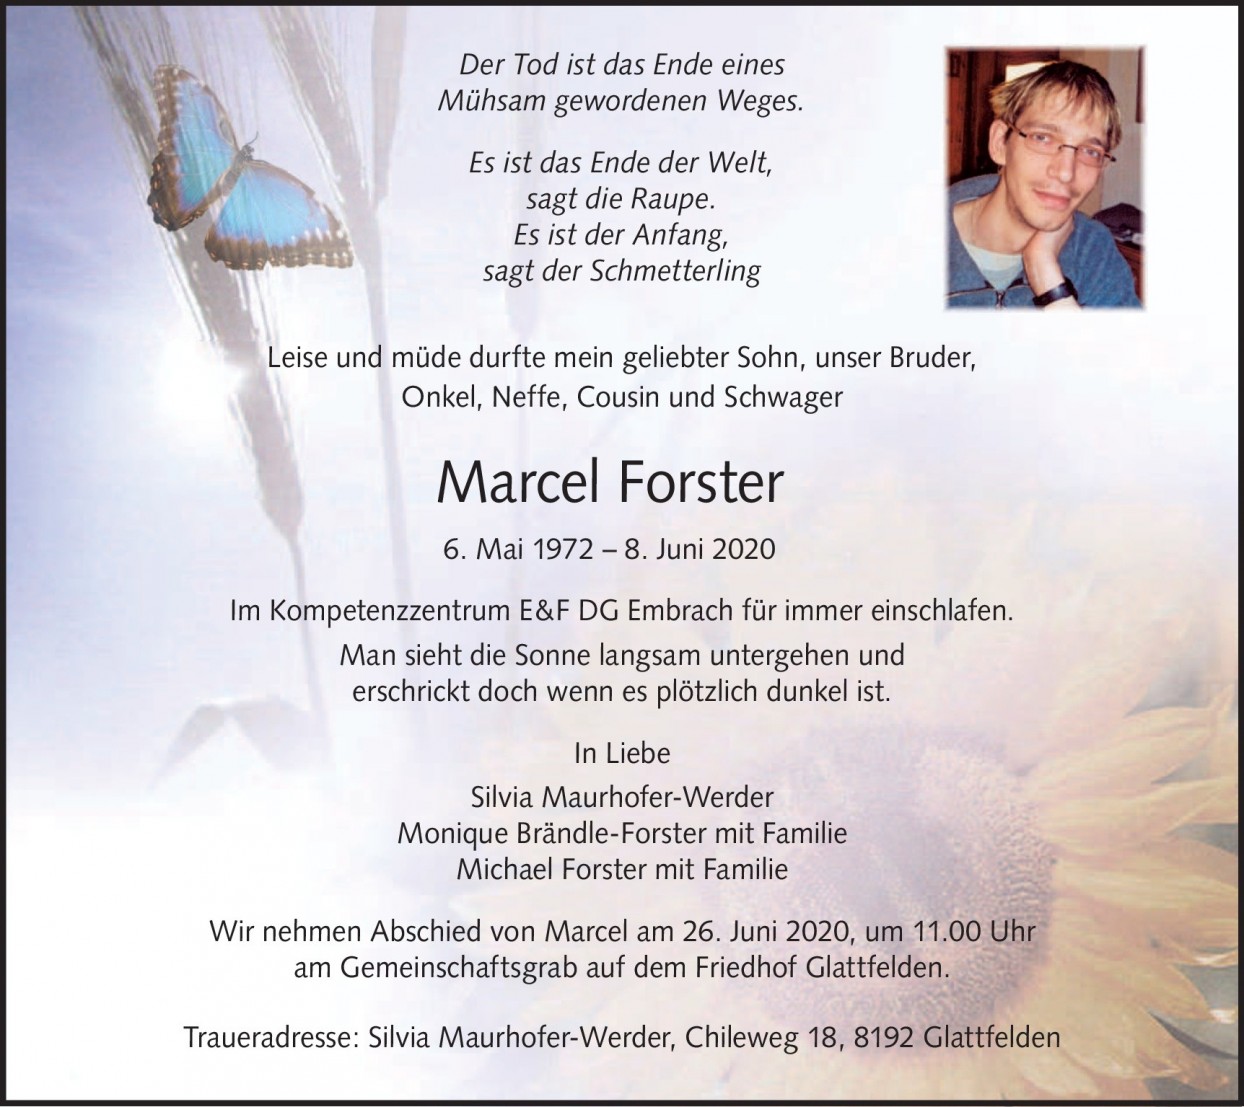 Marcel Forster